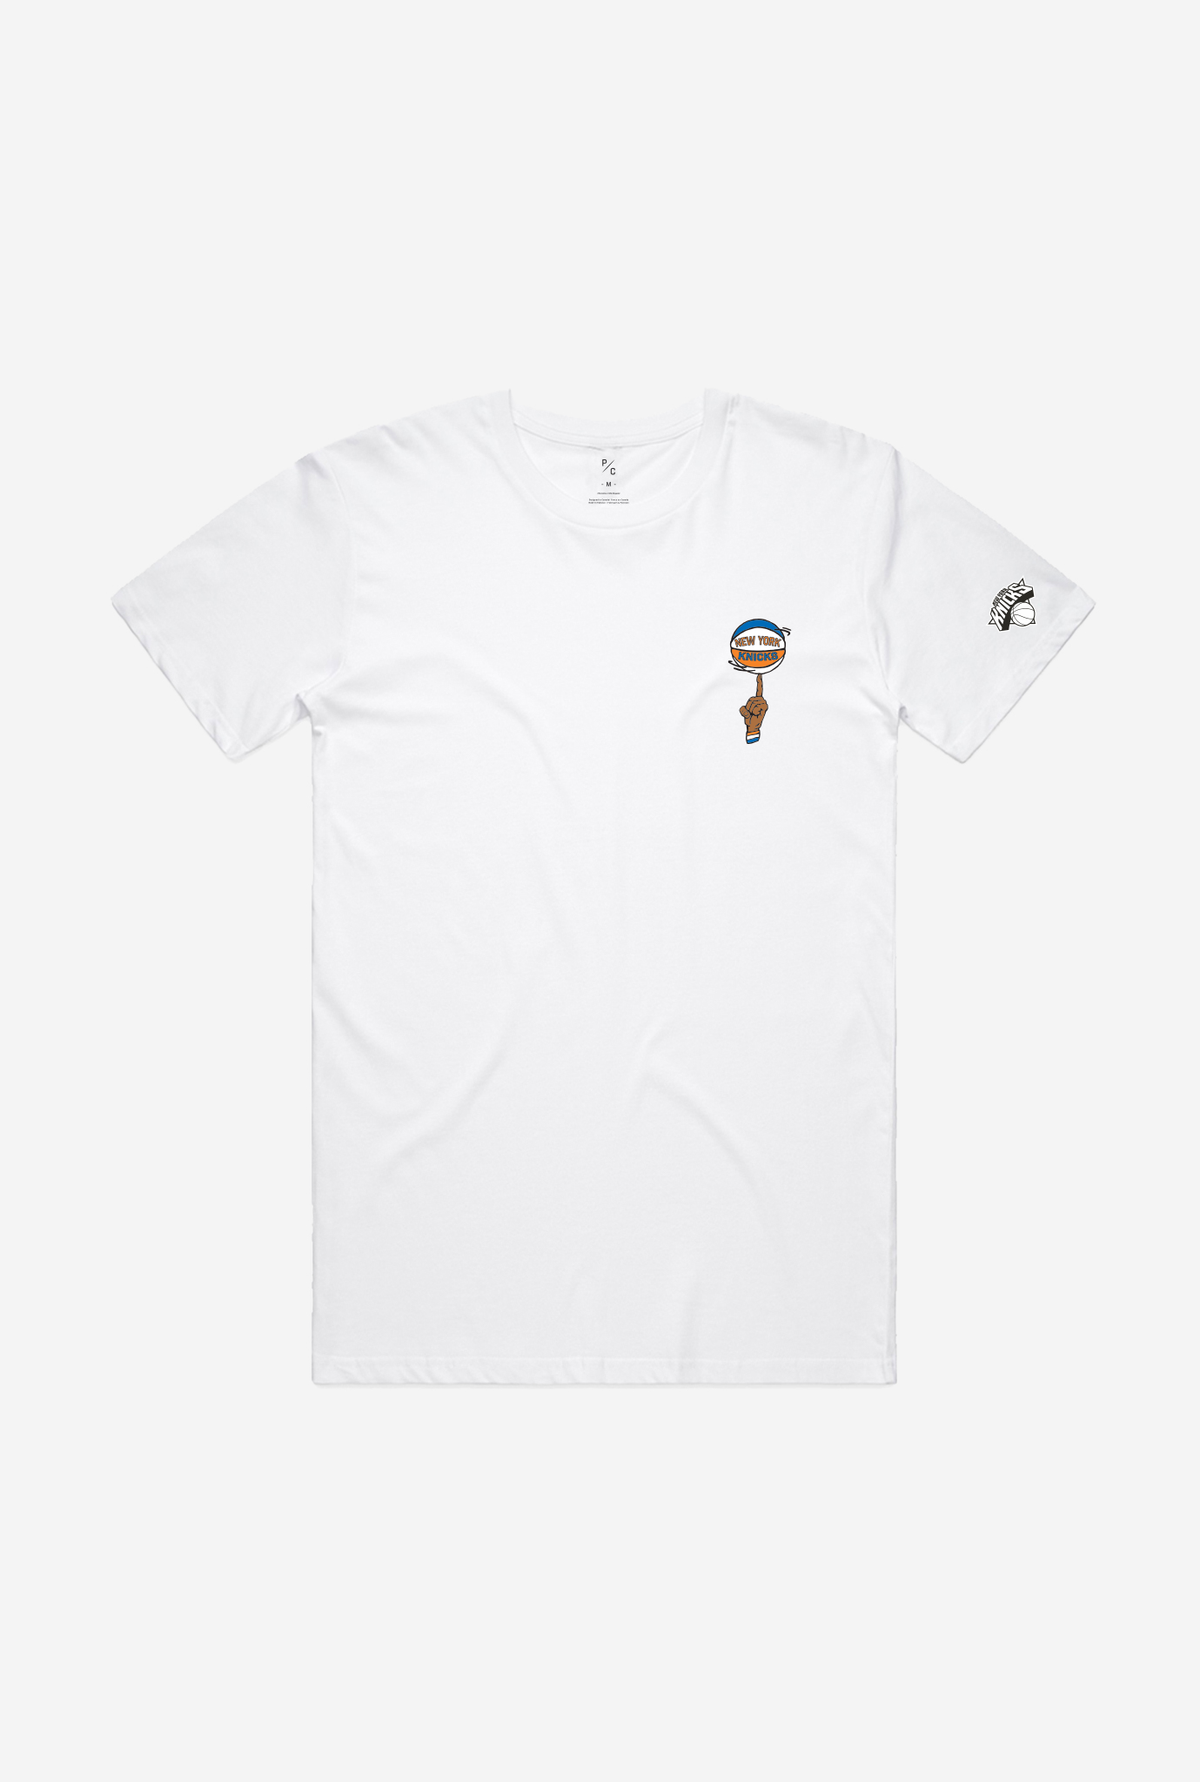 New York Knicks Spinning Ball T-Shirt - White